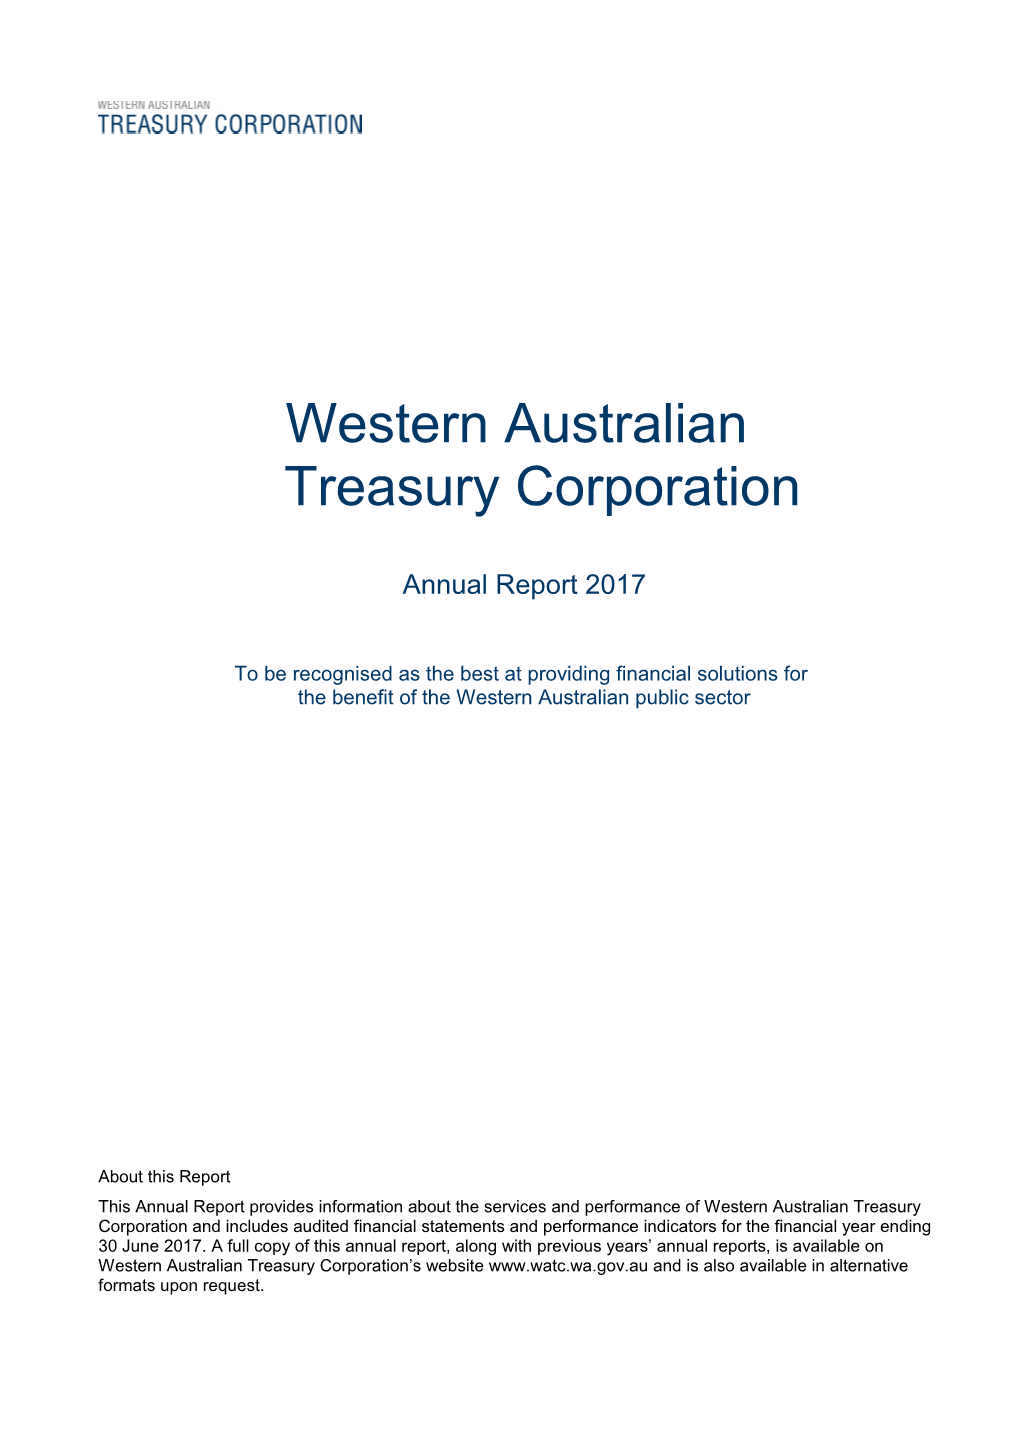 Western Australian Treasury Corporation